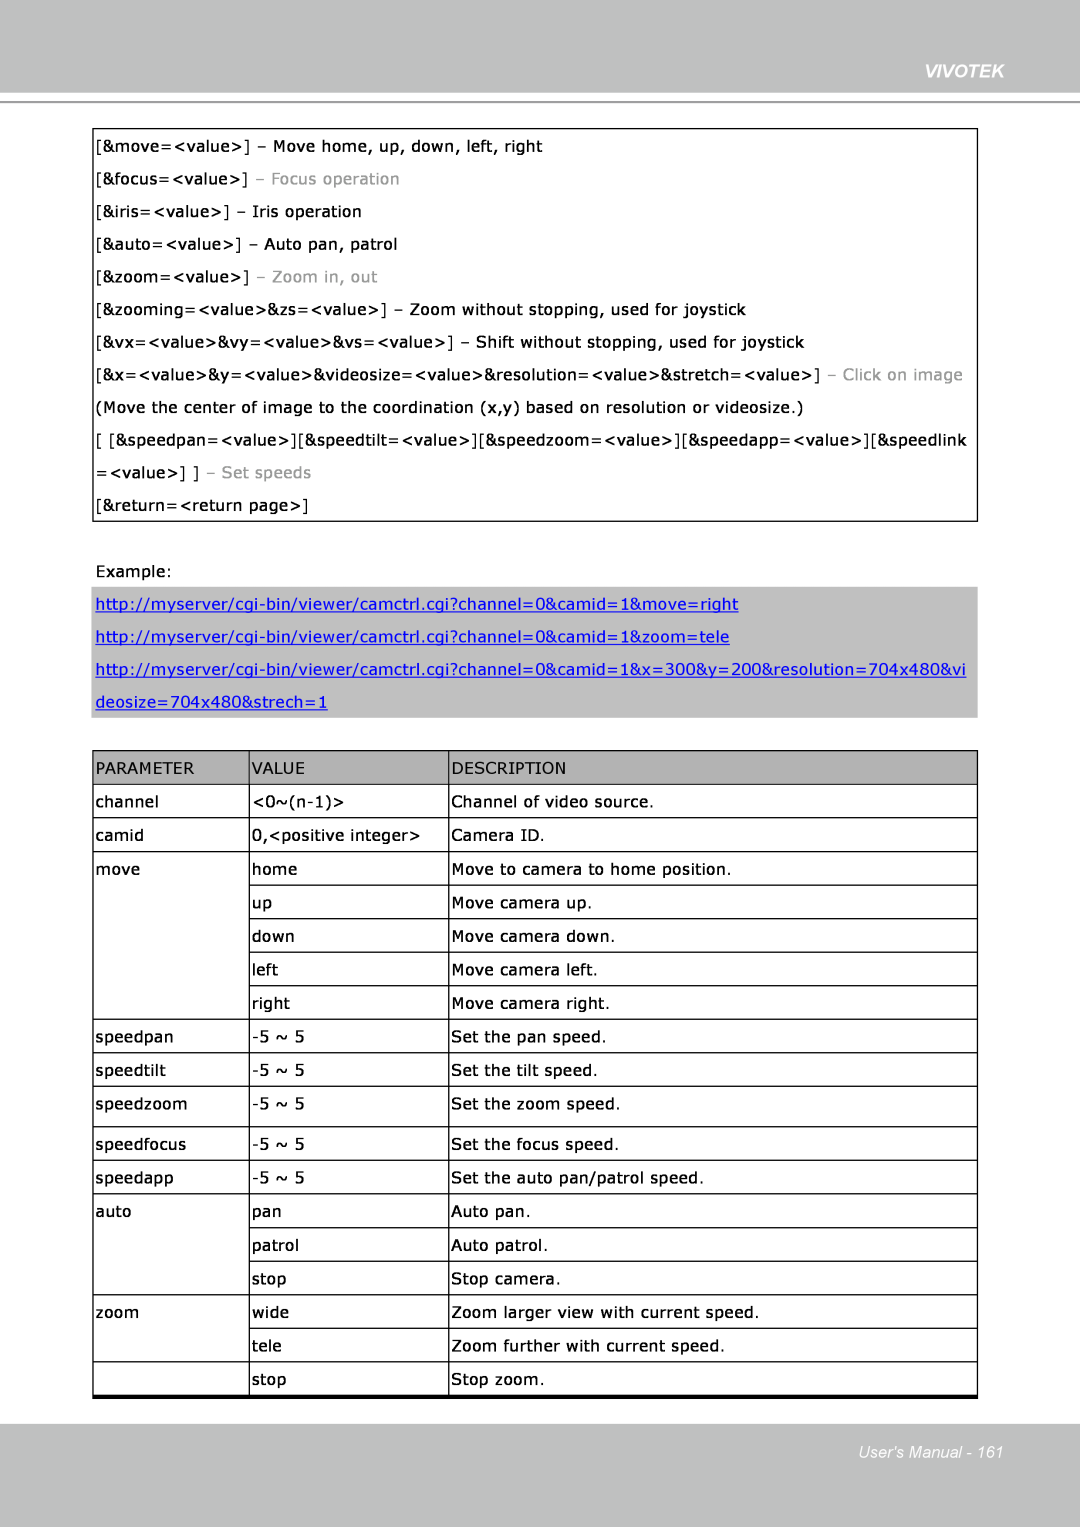 Vivotek IP8151 manual Vivotek, return=<return page>, Users Manual 